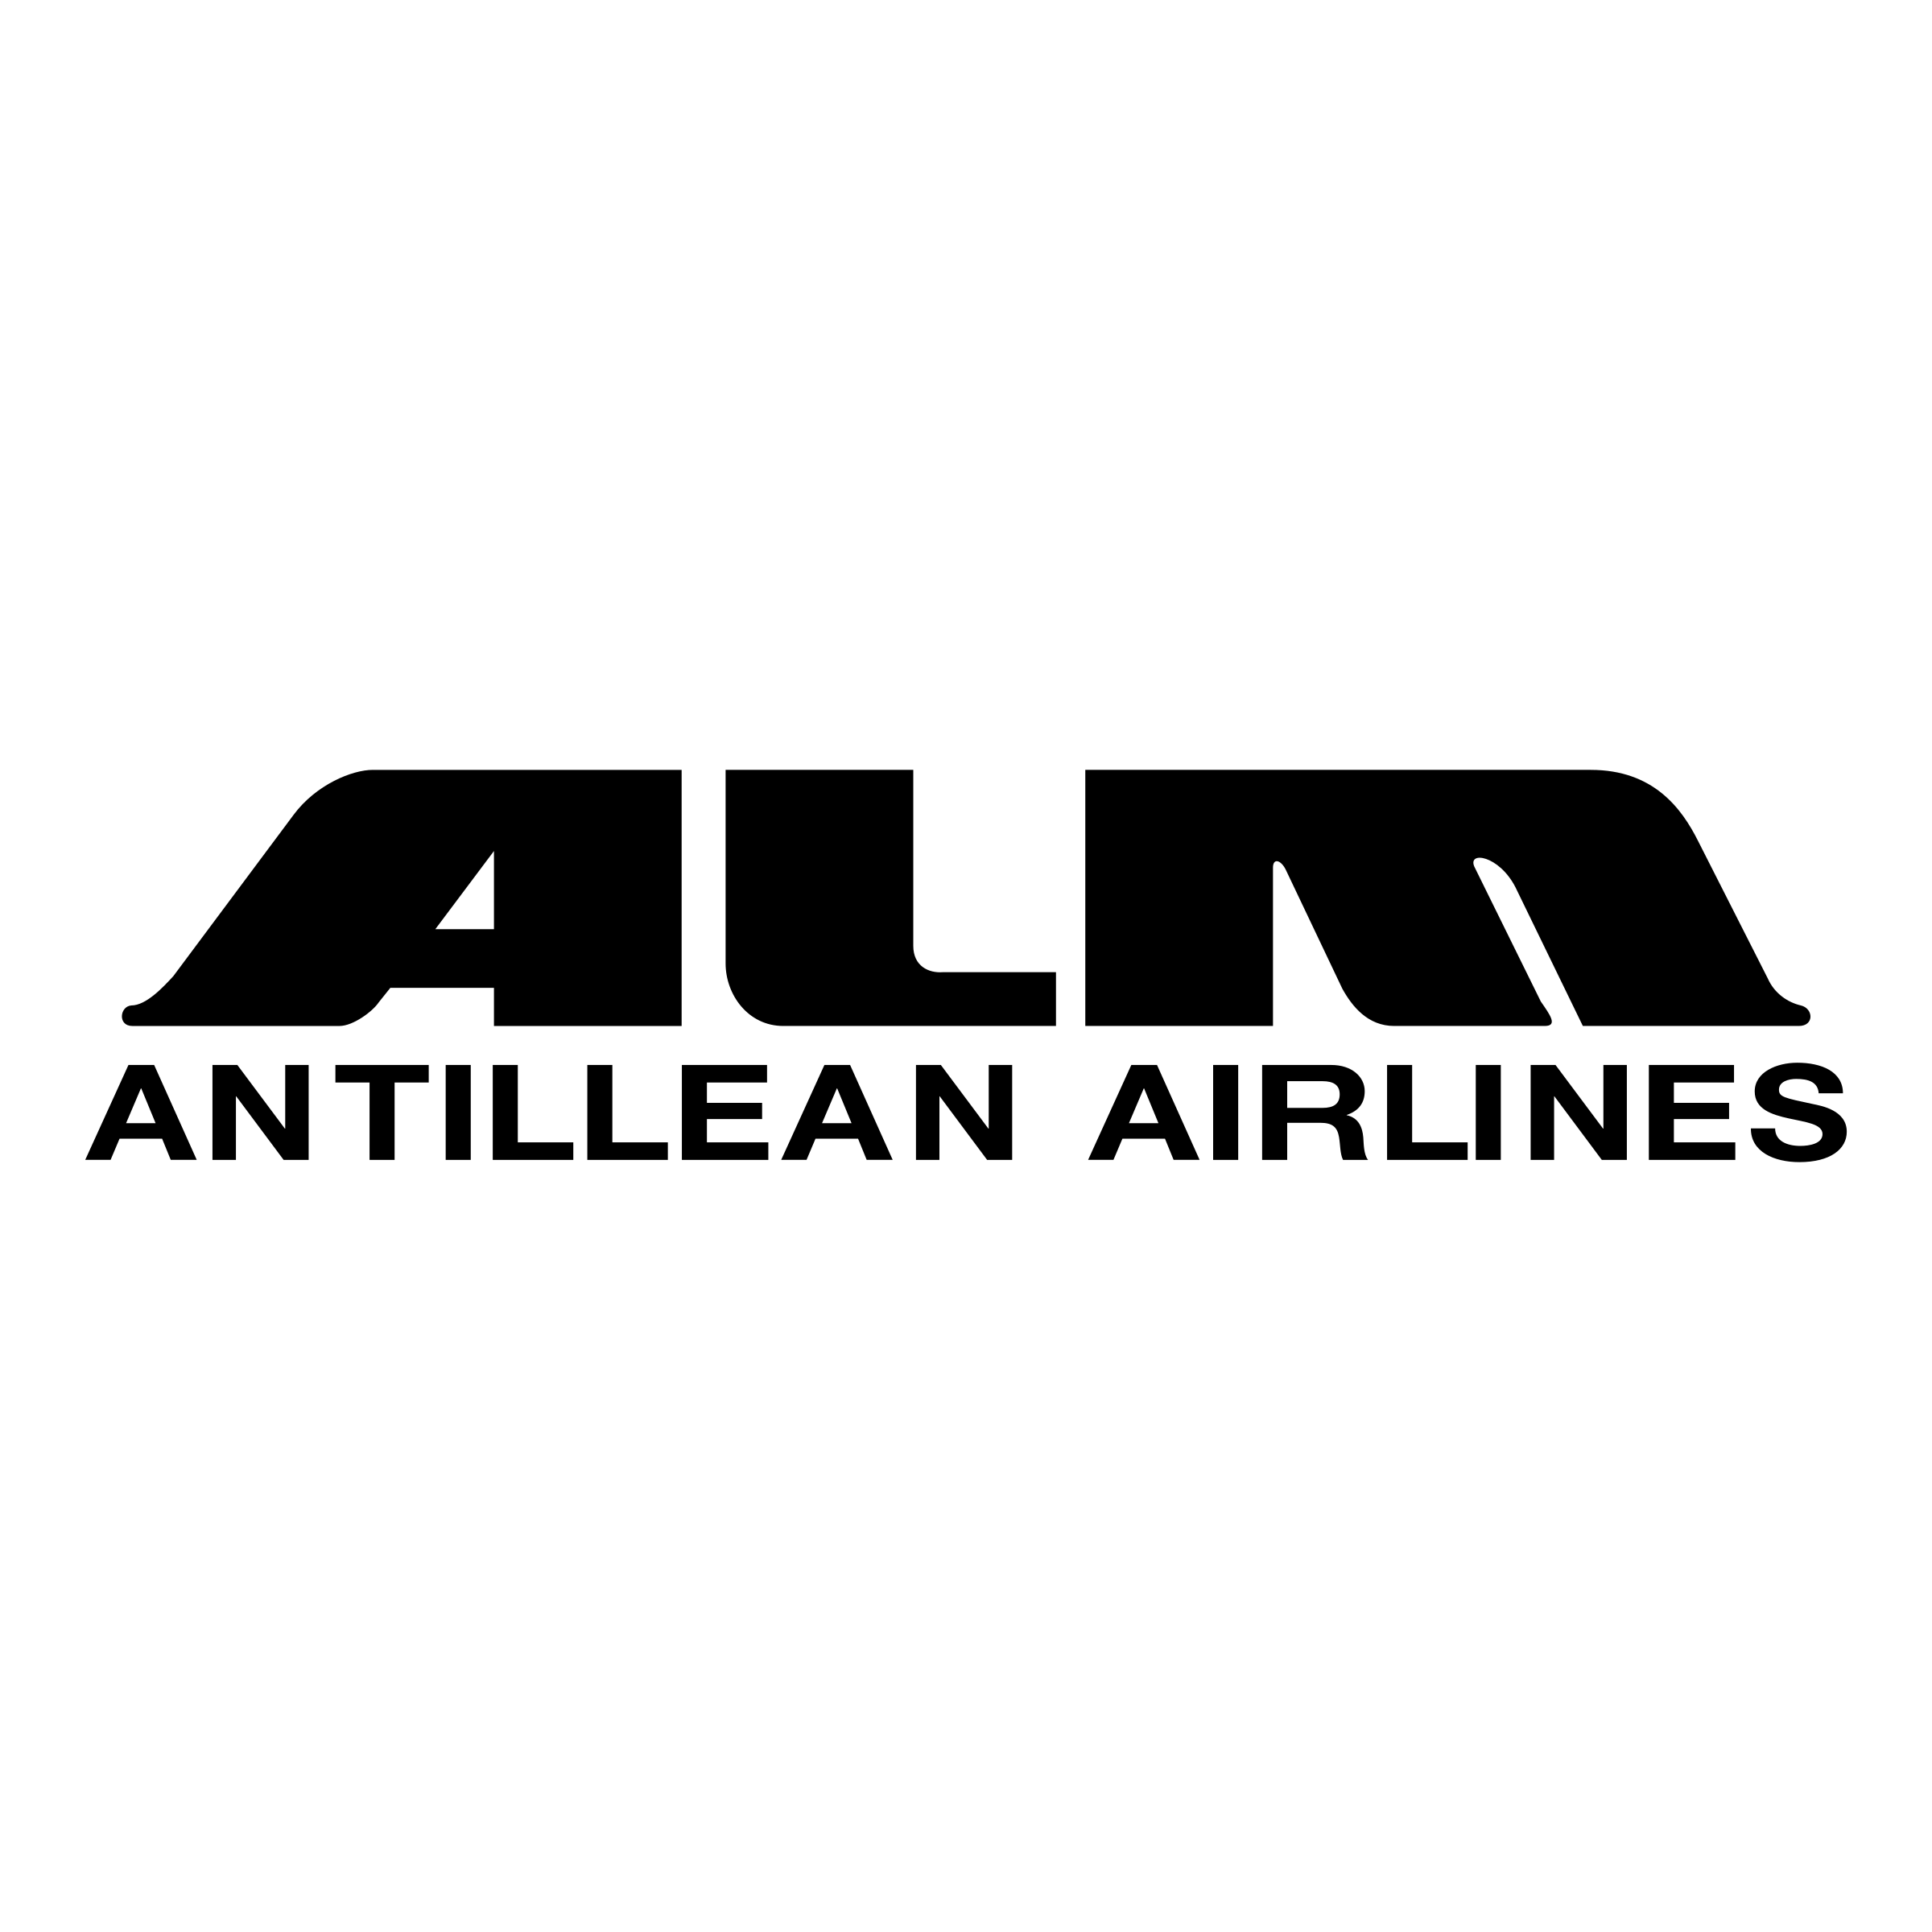 ALM Logo - ALM Logo PNG Transparent & SVG Vector - Freebie Supply